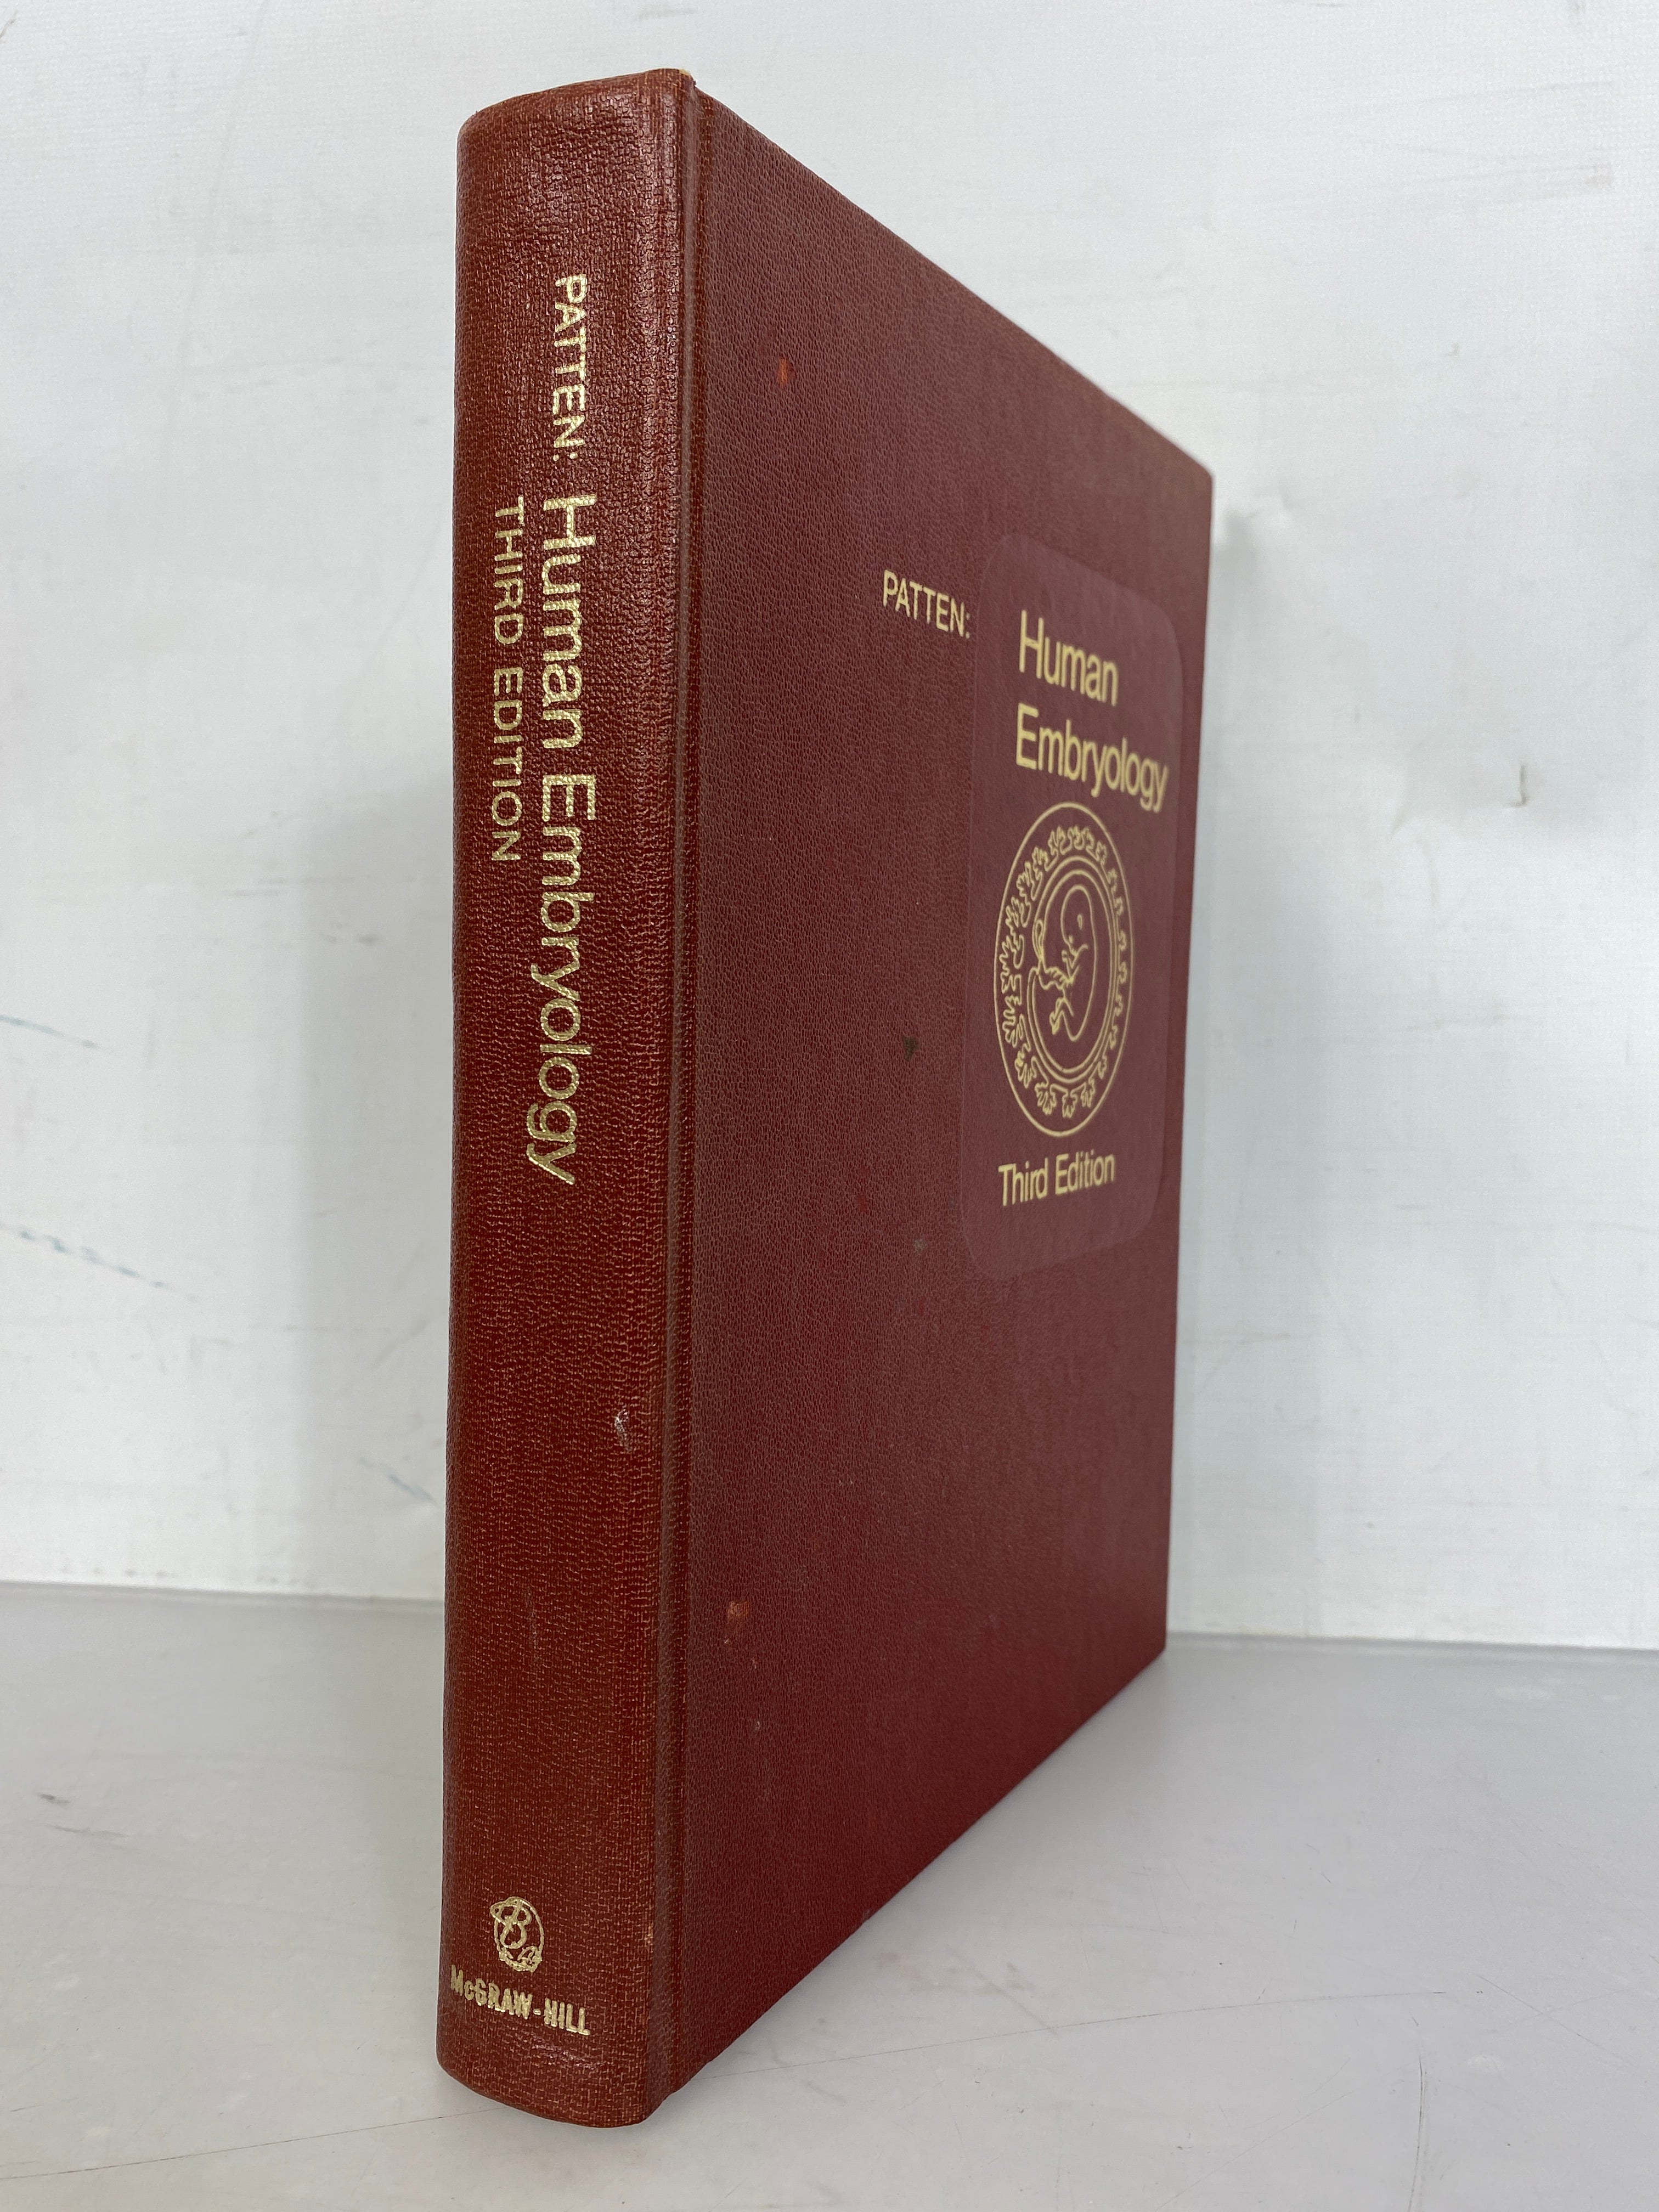 Human Embryology by Bradley Patten Third Edition 1968 HC